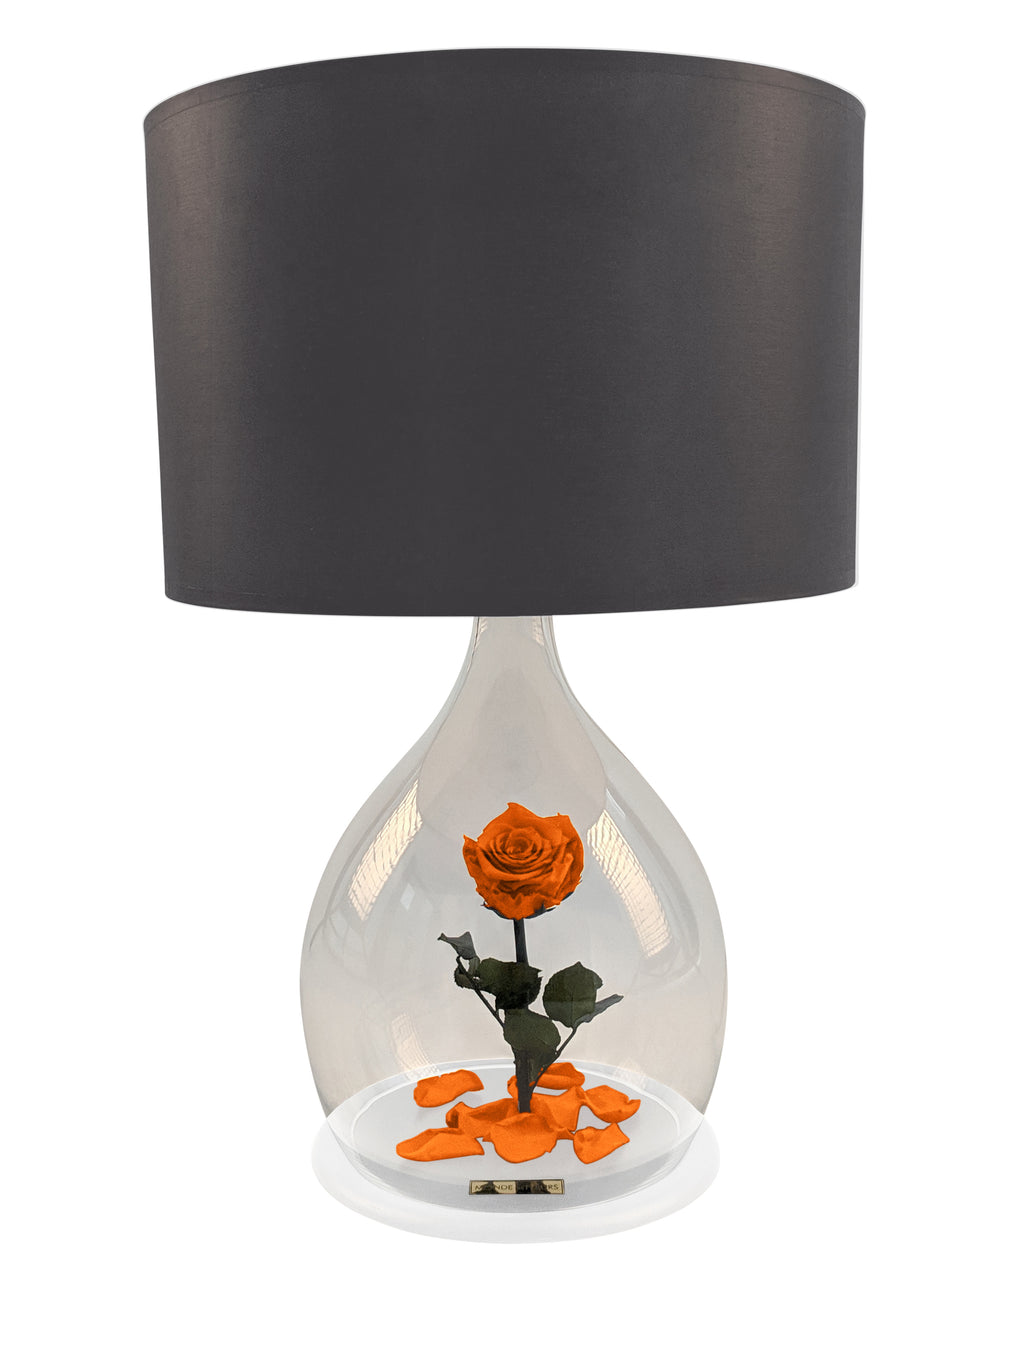 Rosen Lampe mit Rose in Orange - MONDE DES FLEURS